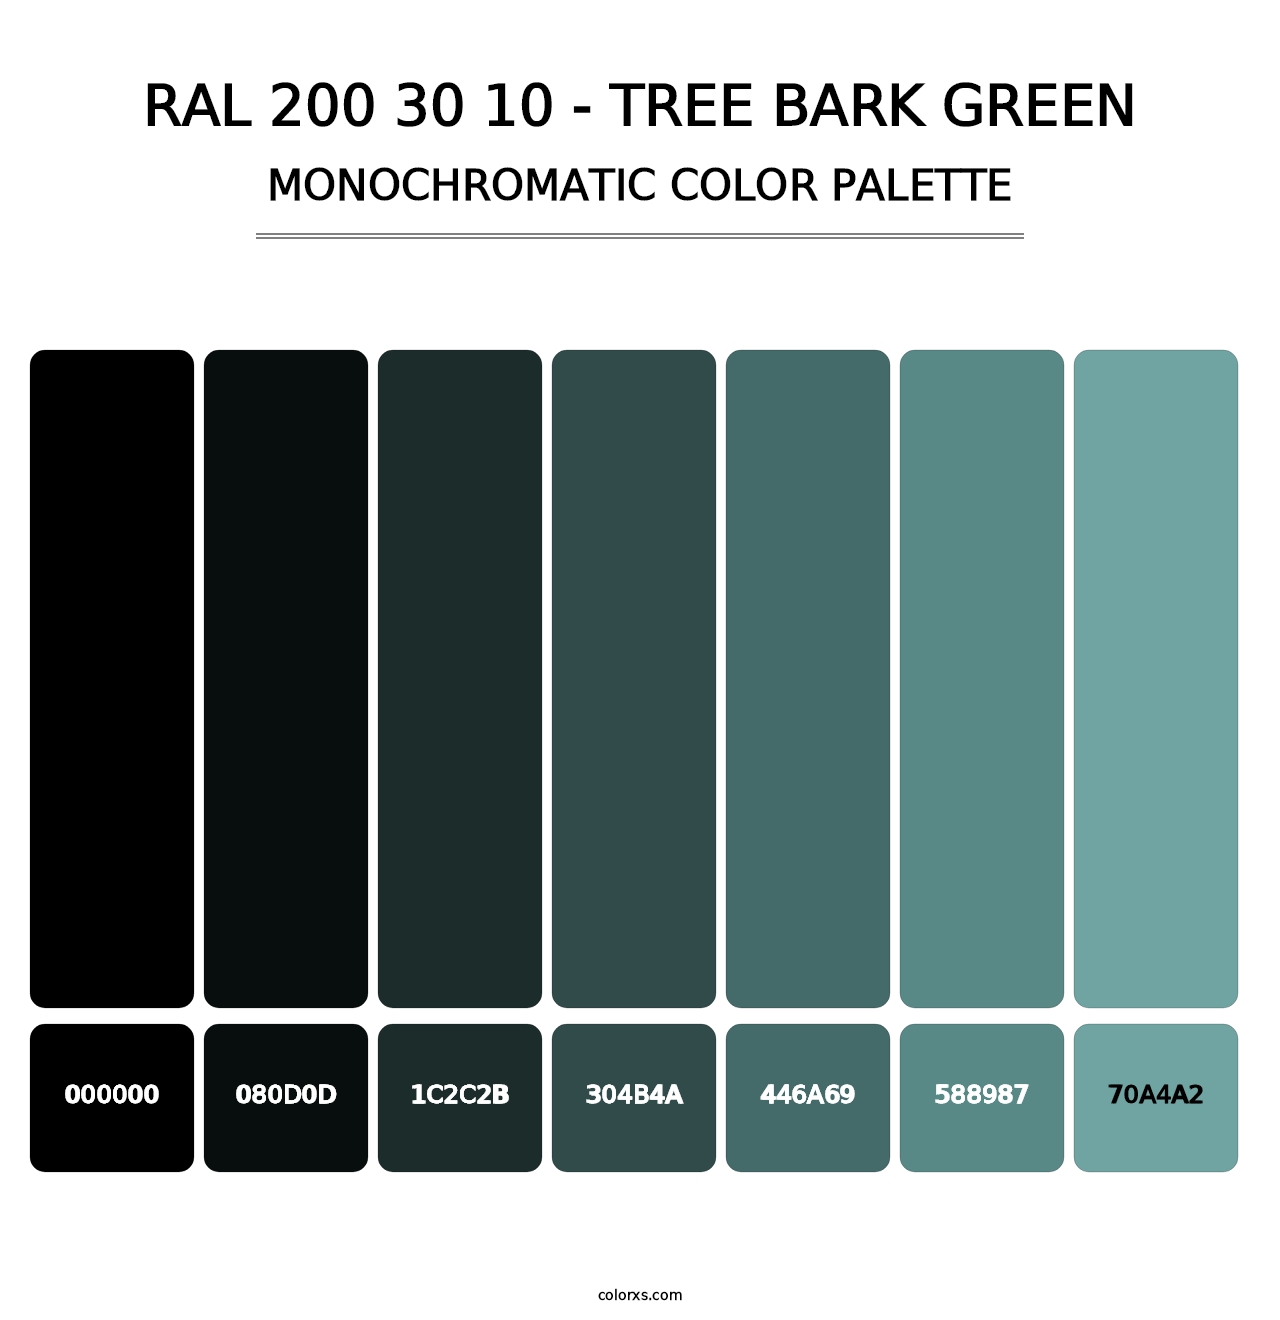 RAL 200 30 10 - Tree Bark Green - Monochromatic Color Palette